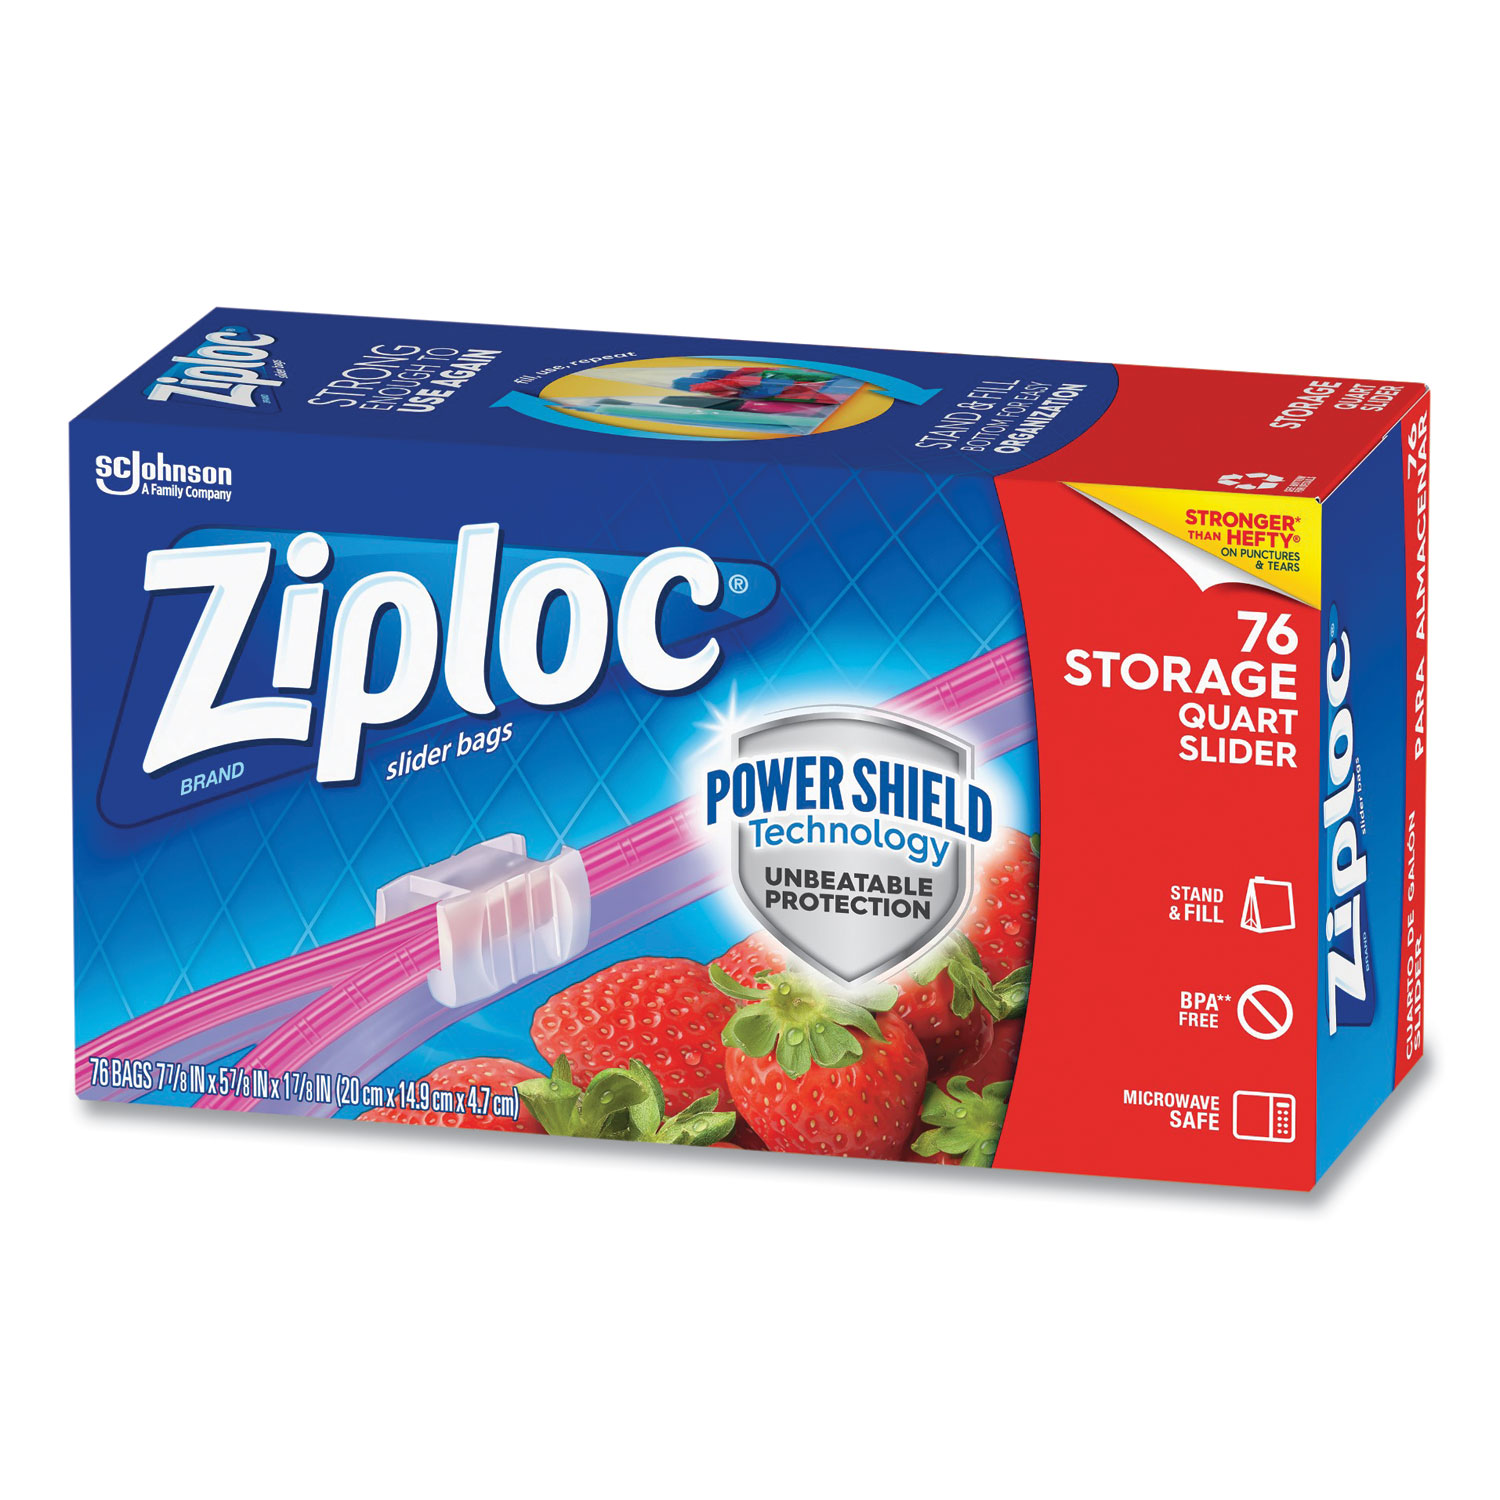 Ziploc Slider Freezer Gallon & Quart Bags w/ Power Shield